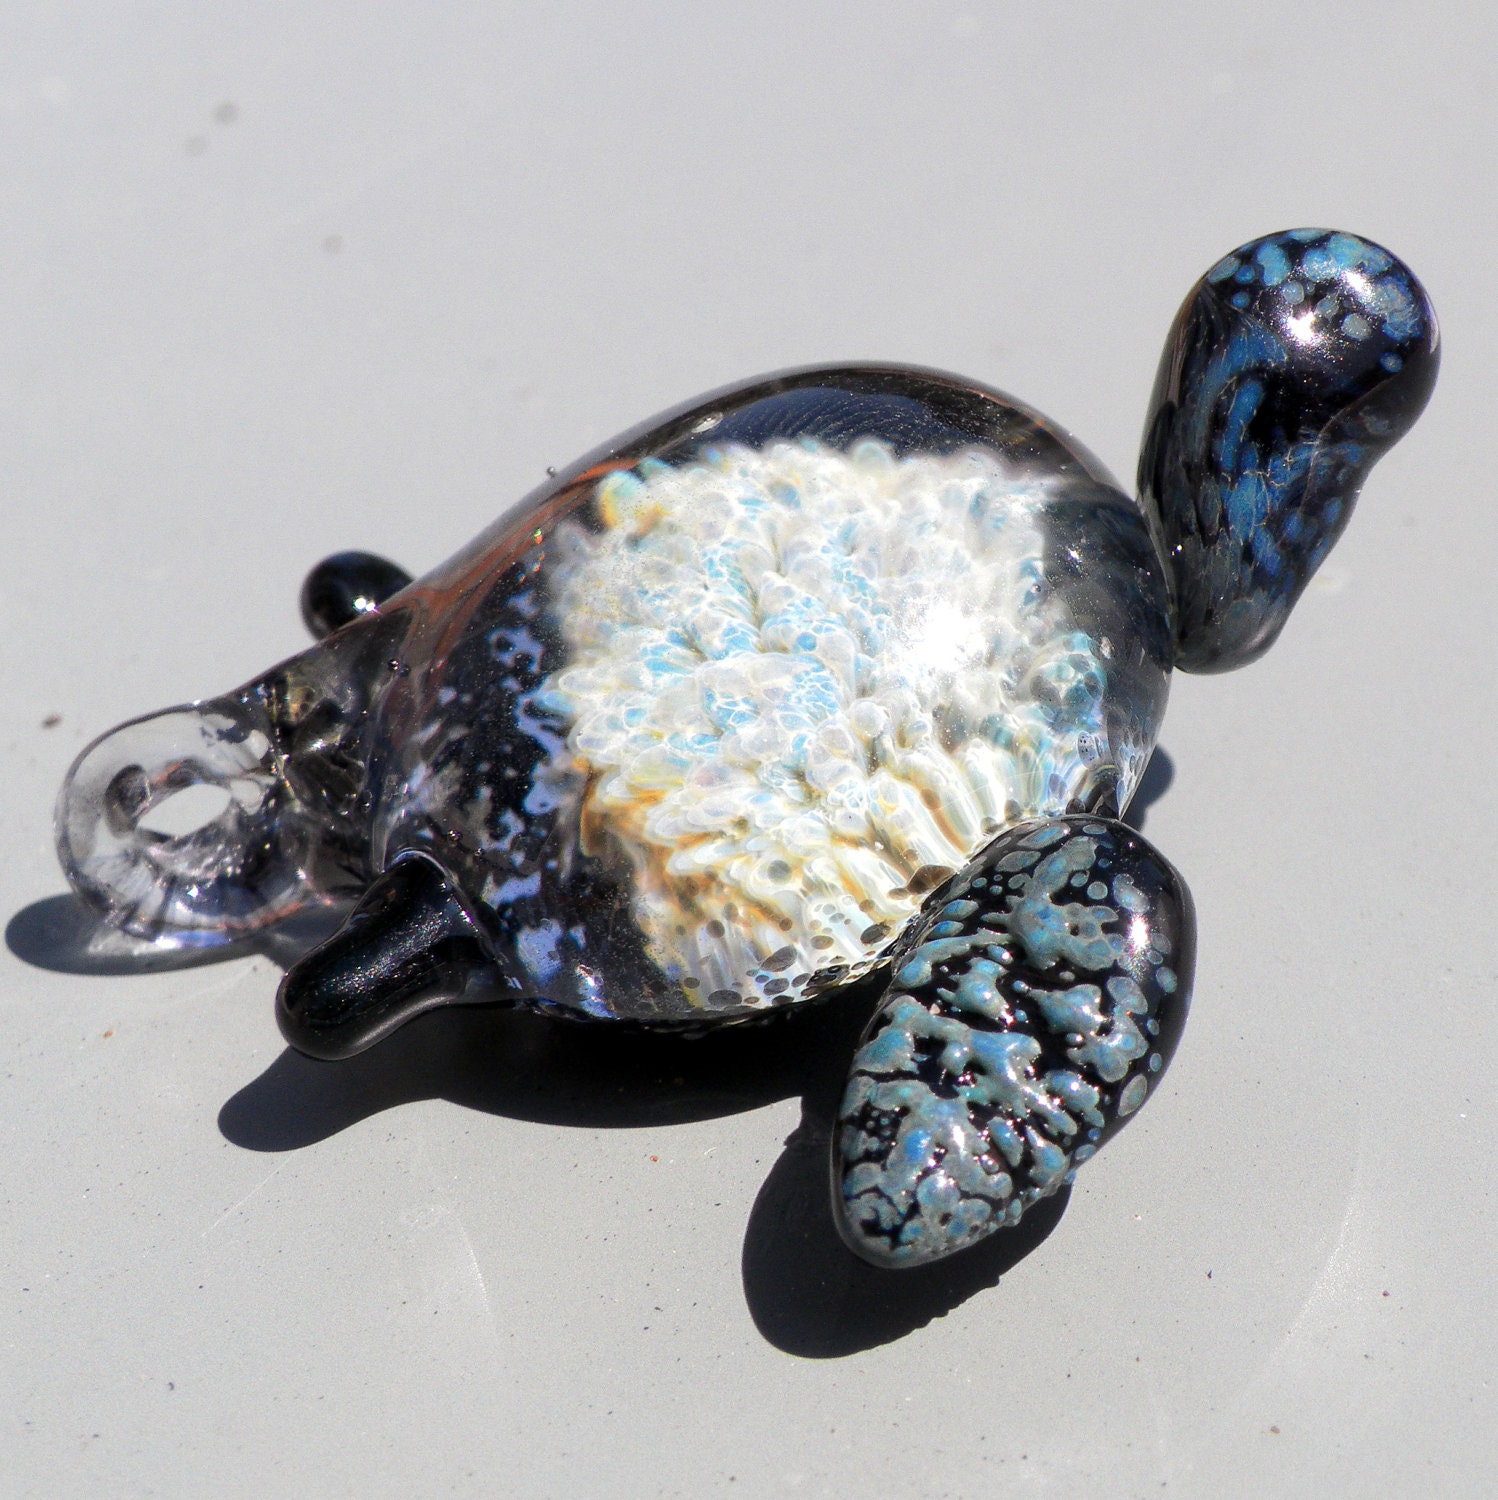 turtle pendant